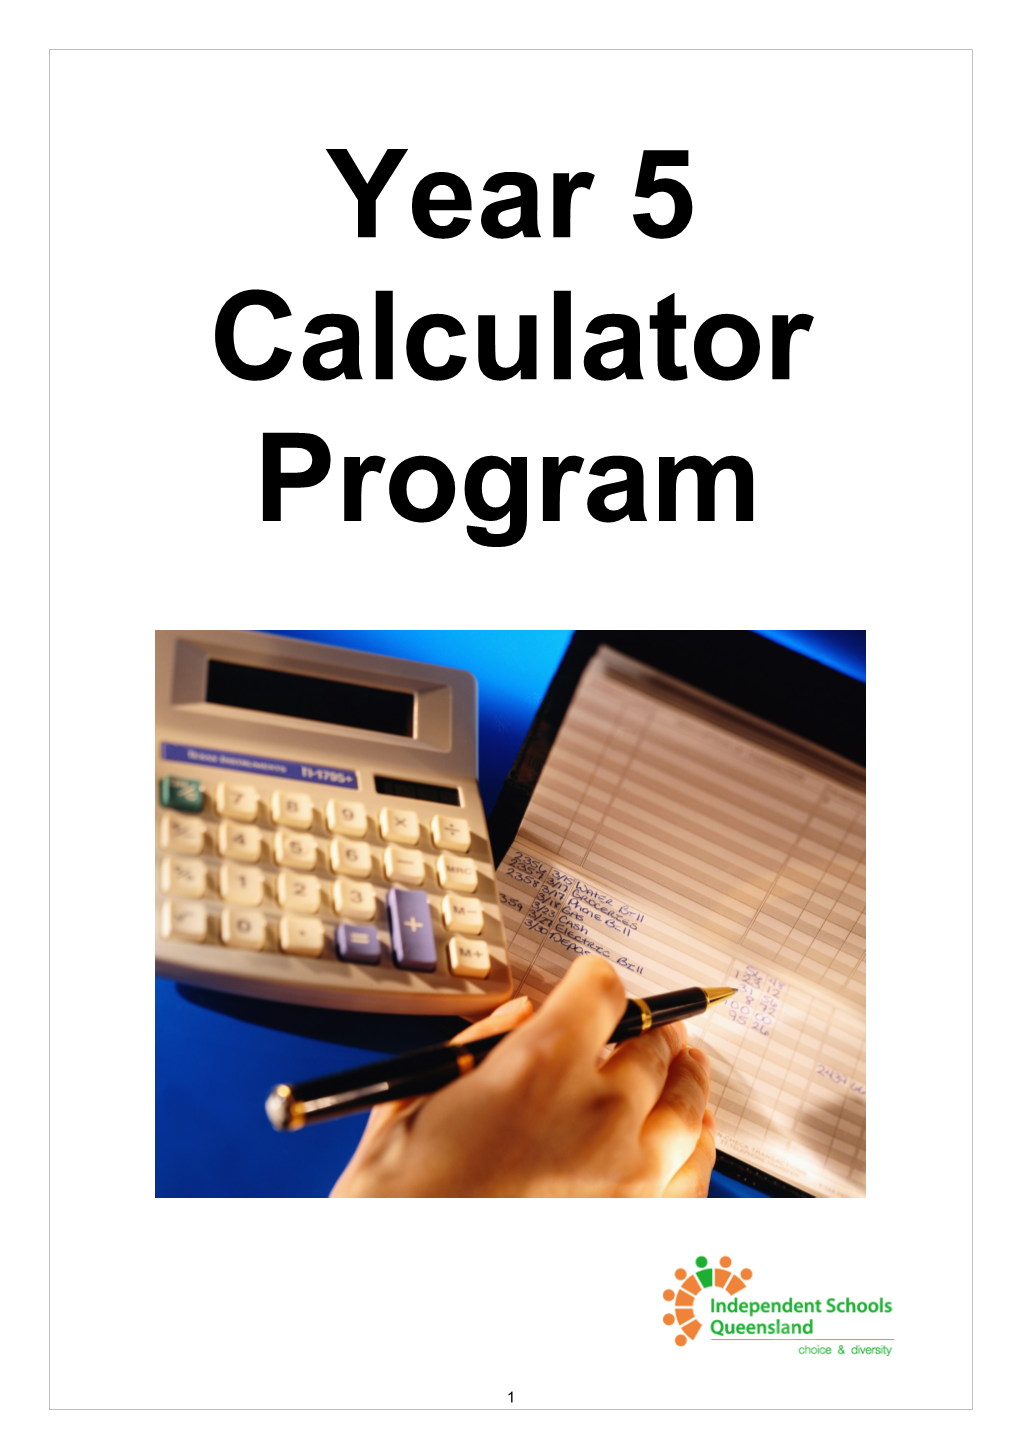 Year 5 Calculator Program